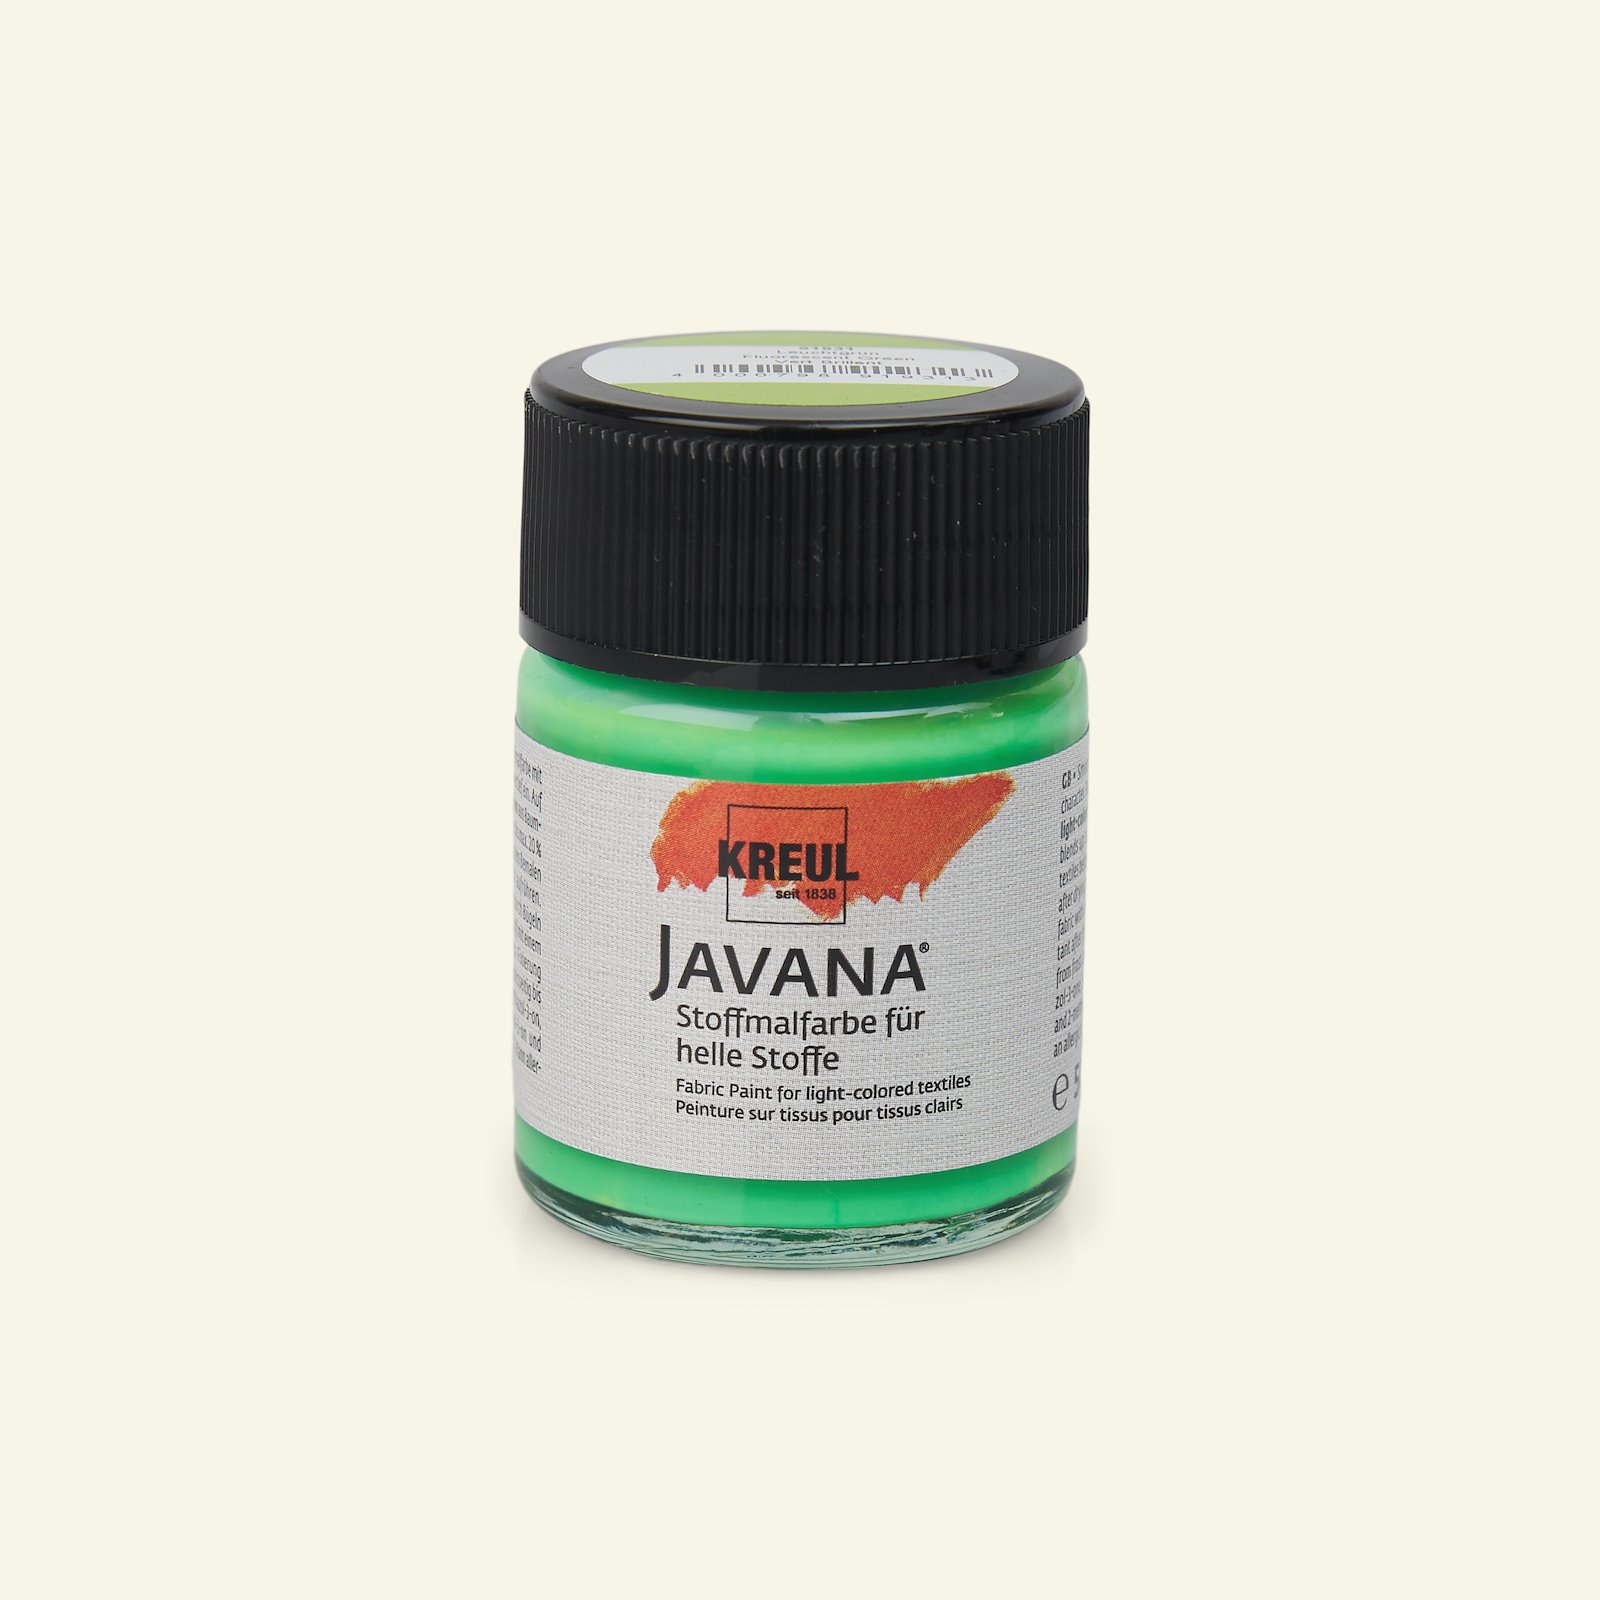 Javana textilfärg, ljusgrön, 50ml 29622_pack_b